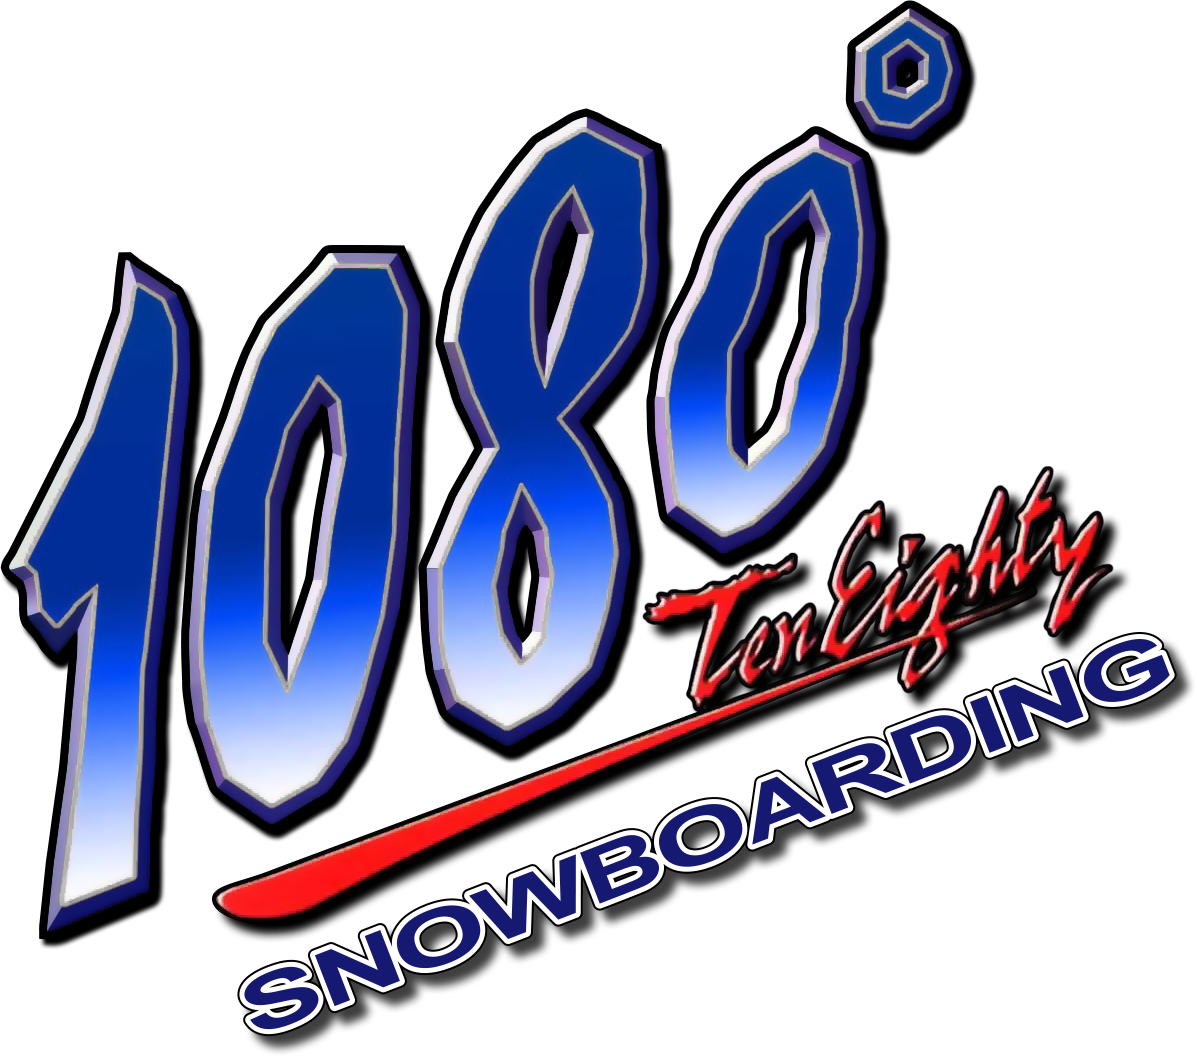 1080º TenEighty Snowboarding Details - LaunchBox Games Database